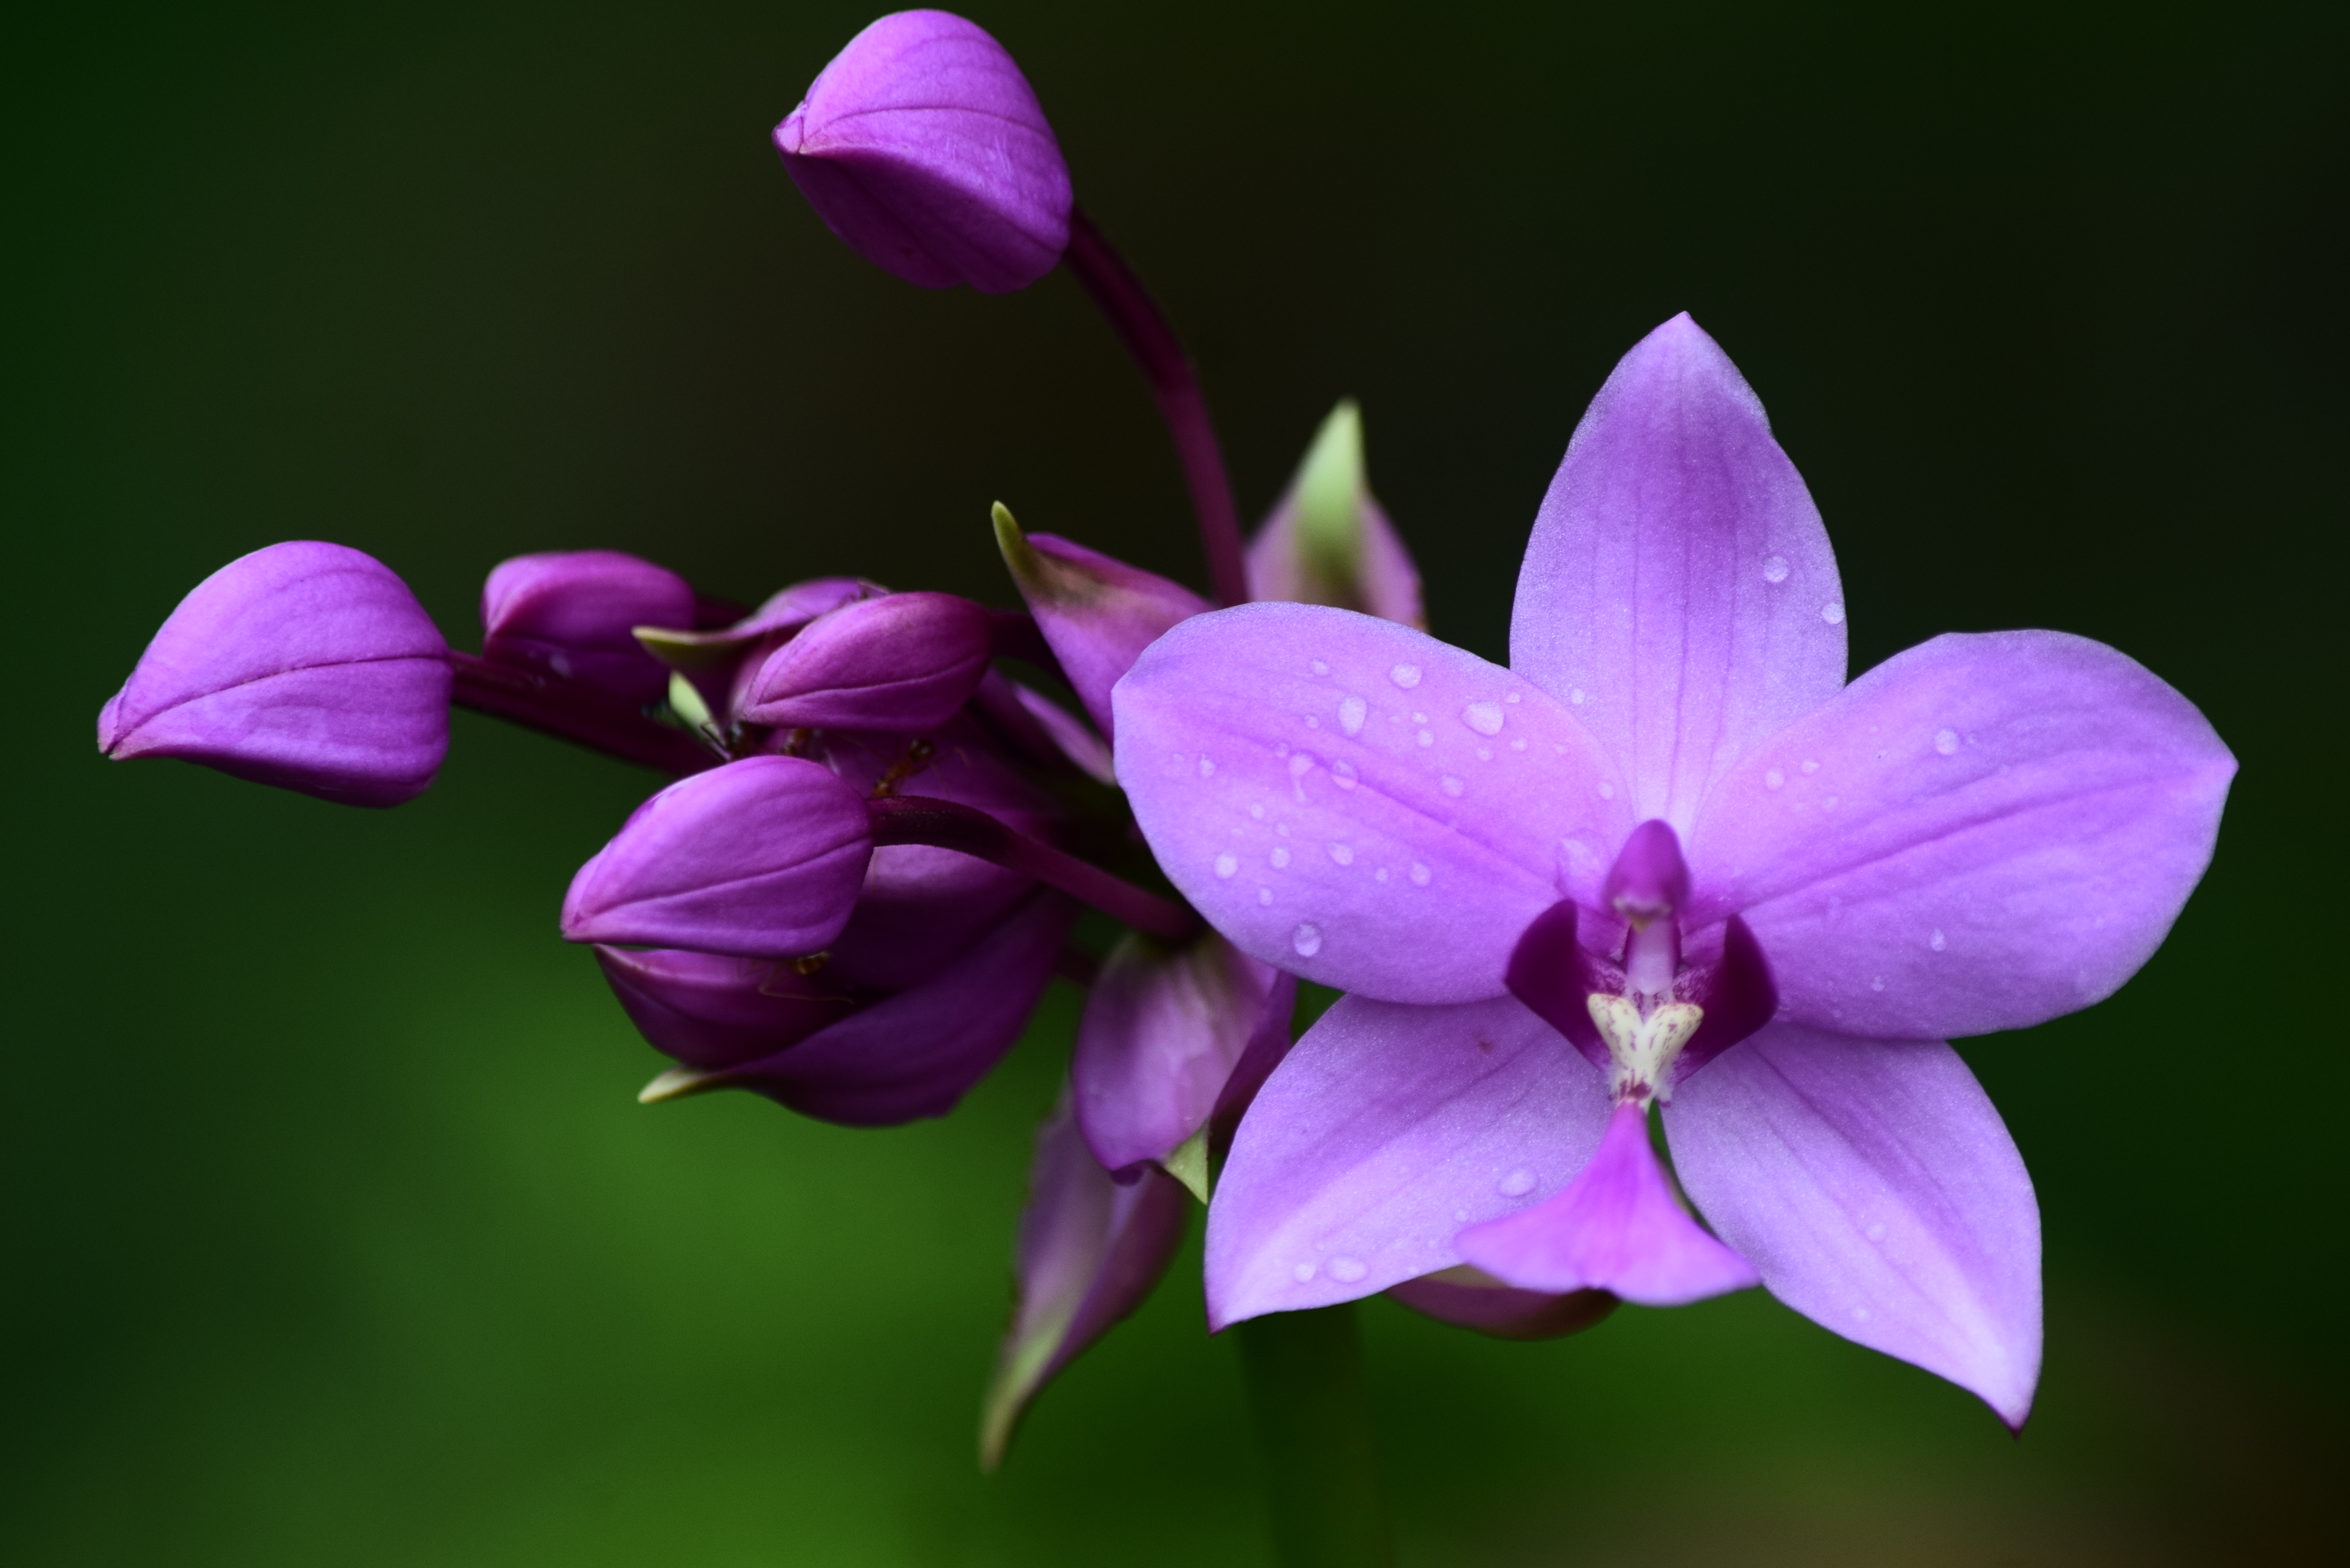 file:purple orchid flower - wikimedia commons